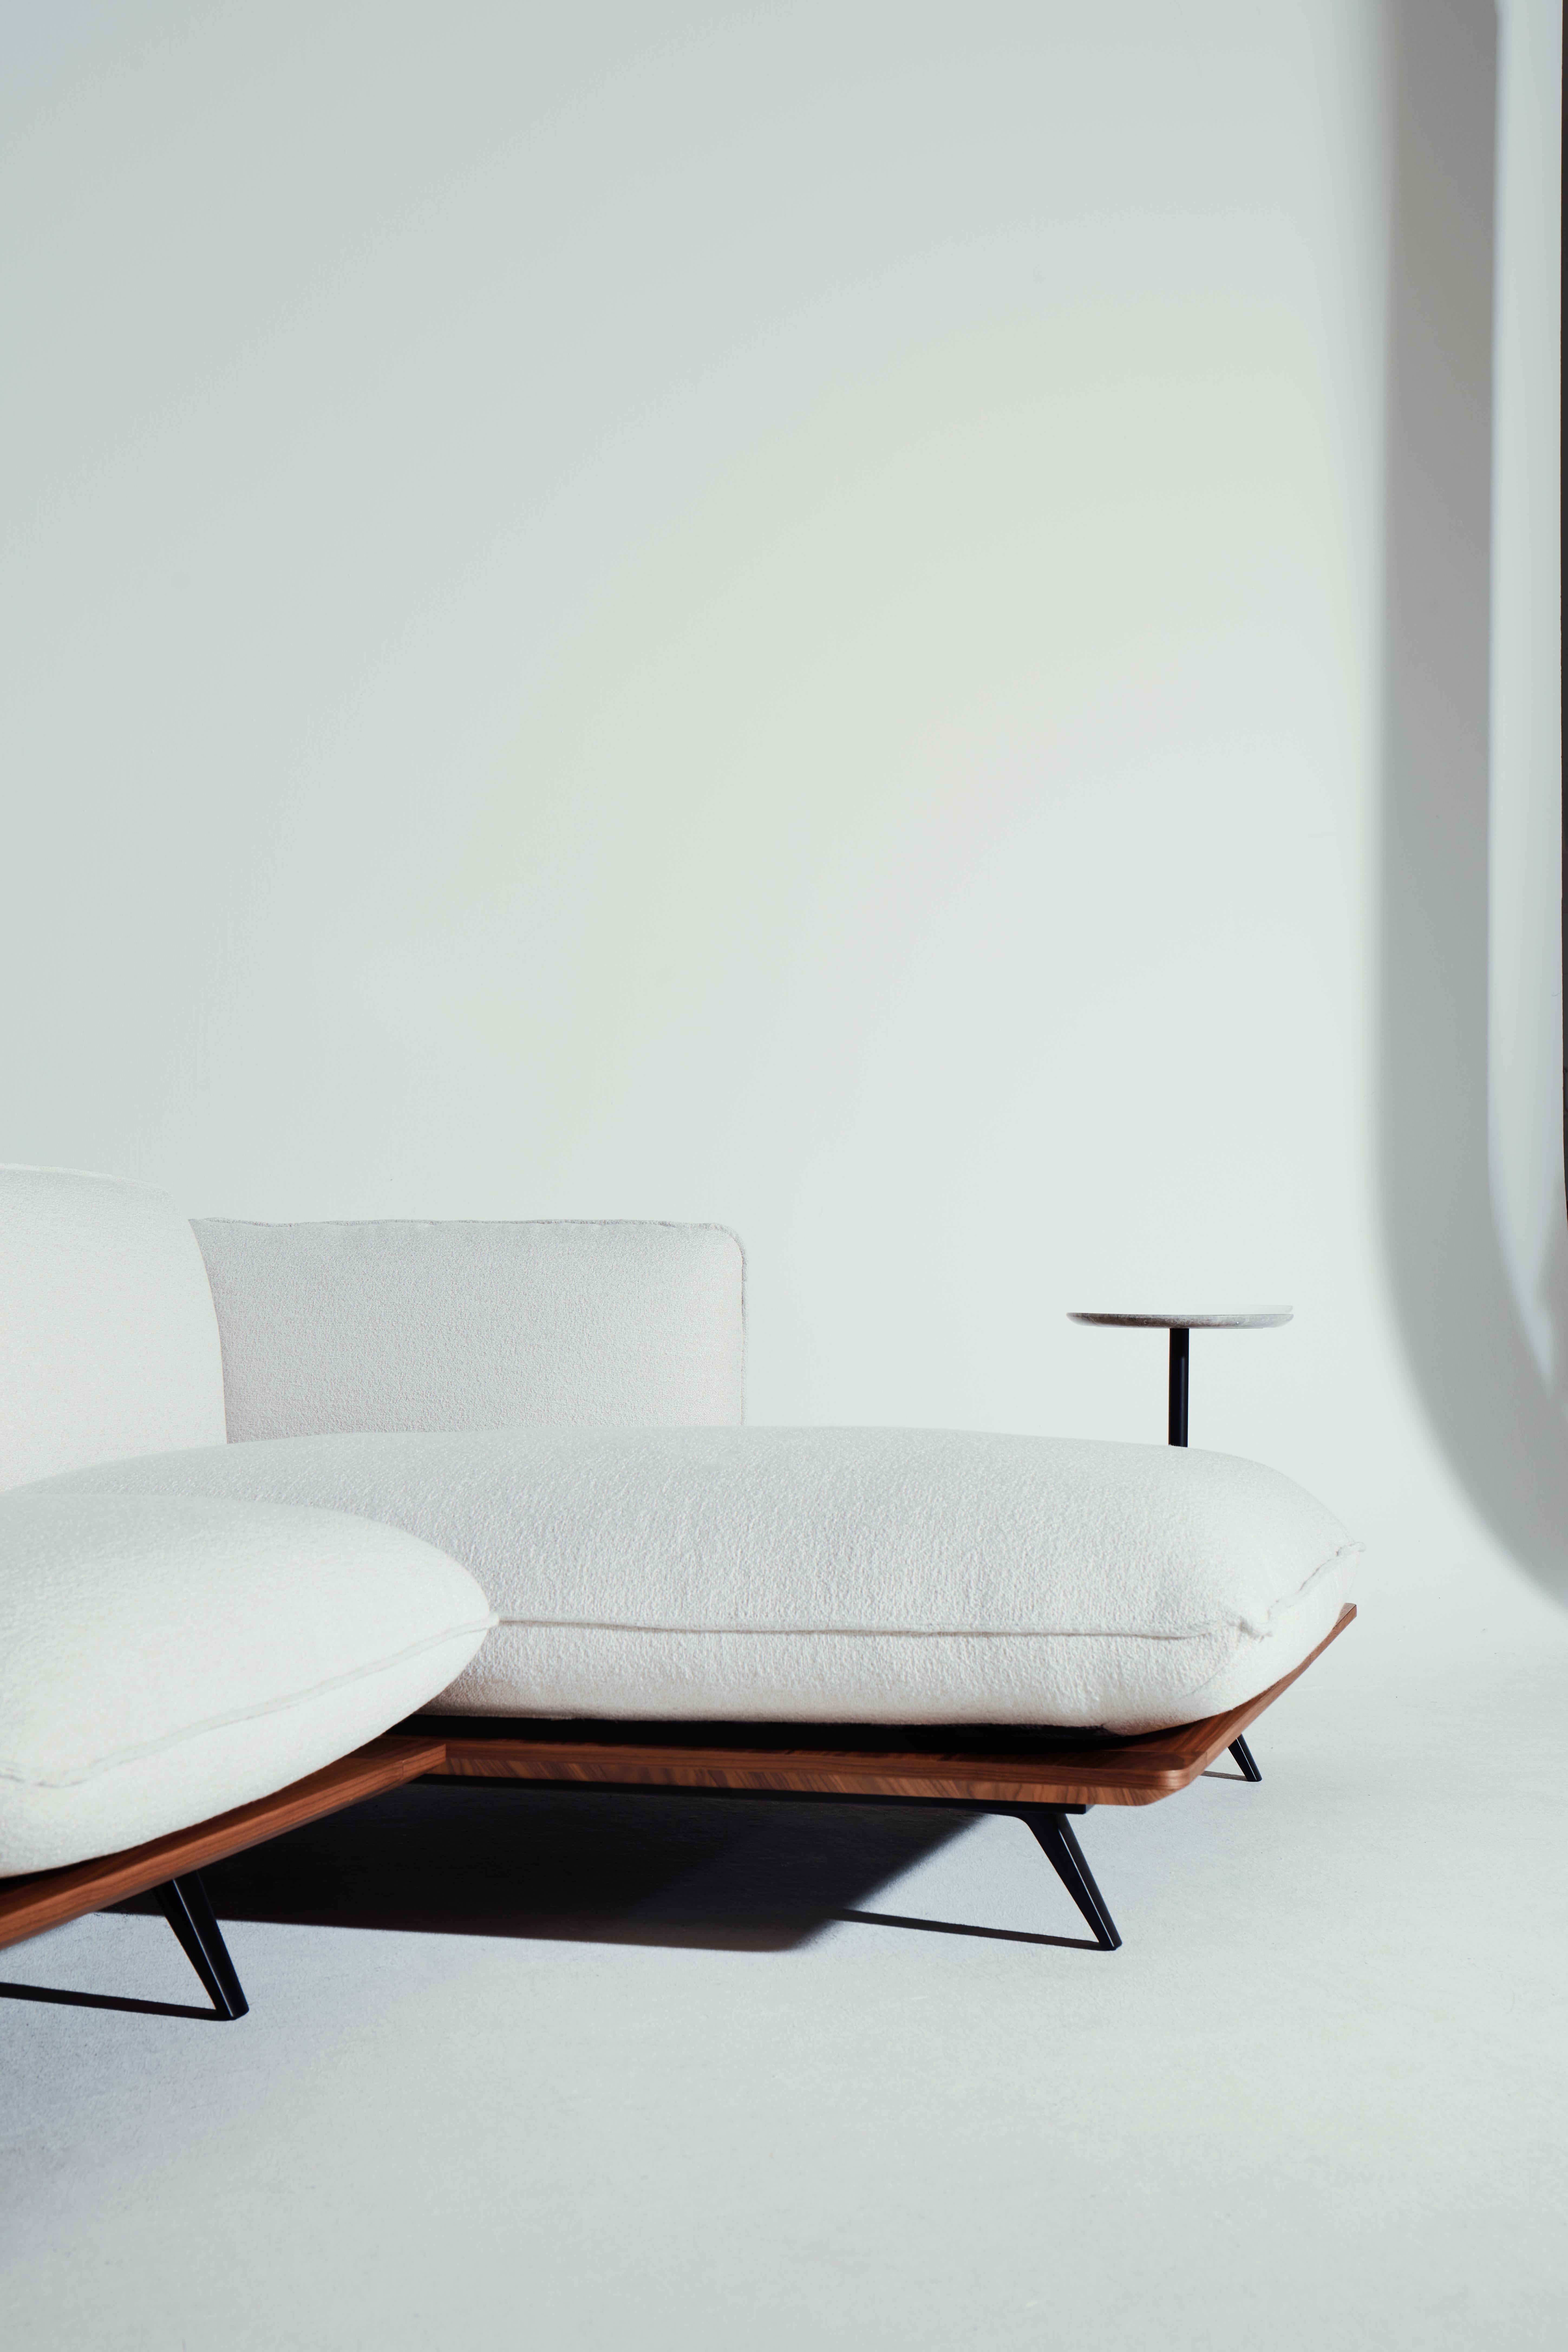 Organic Modern Sahara Sofa by Noé Duchaufour Lawrance